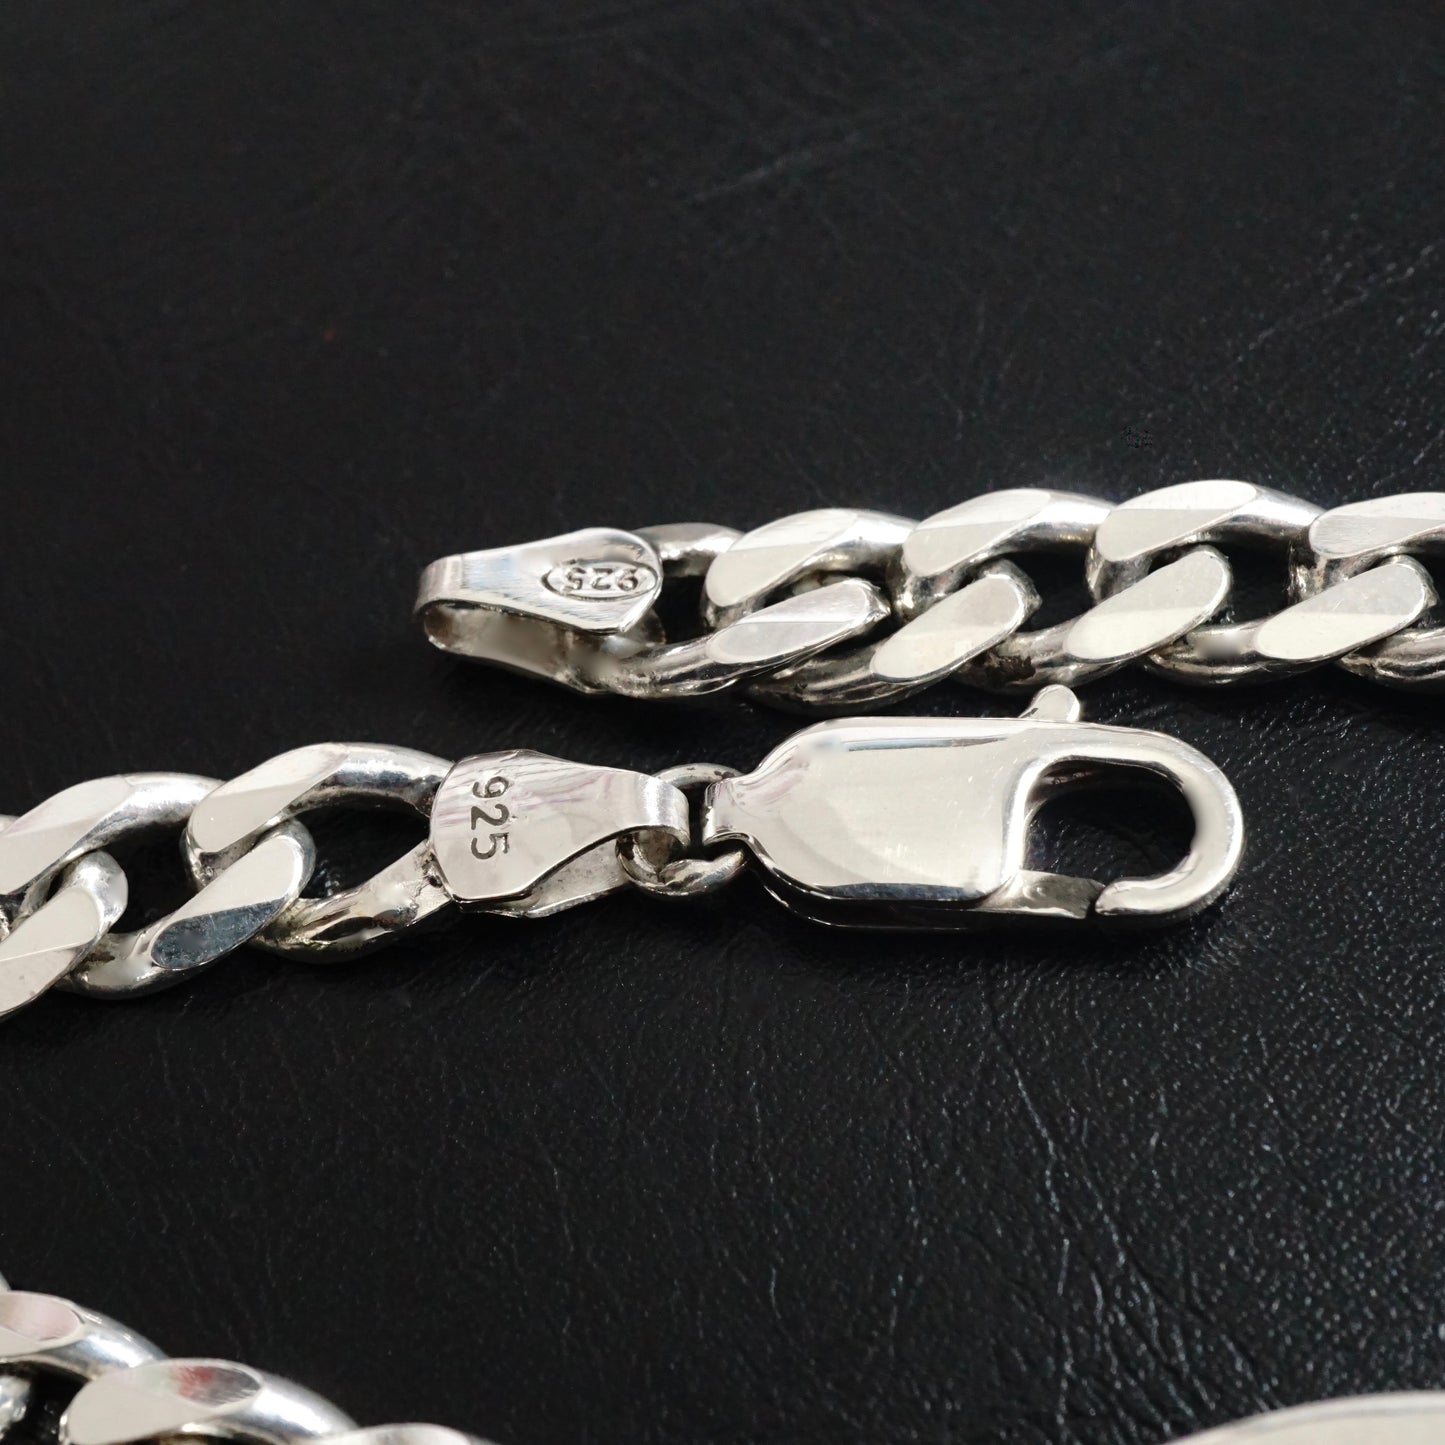 Silver Bracelet Idocrase Cuban Link Chain Neon Gemstone Unique Handmade Men's Jewelry